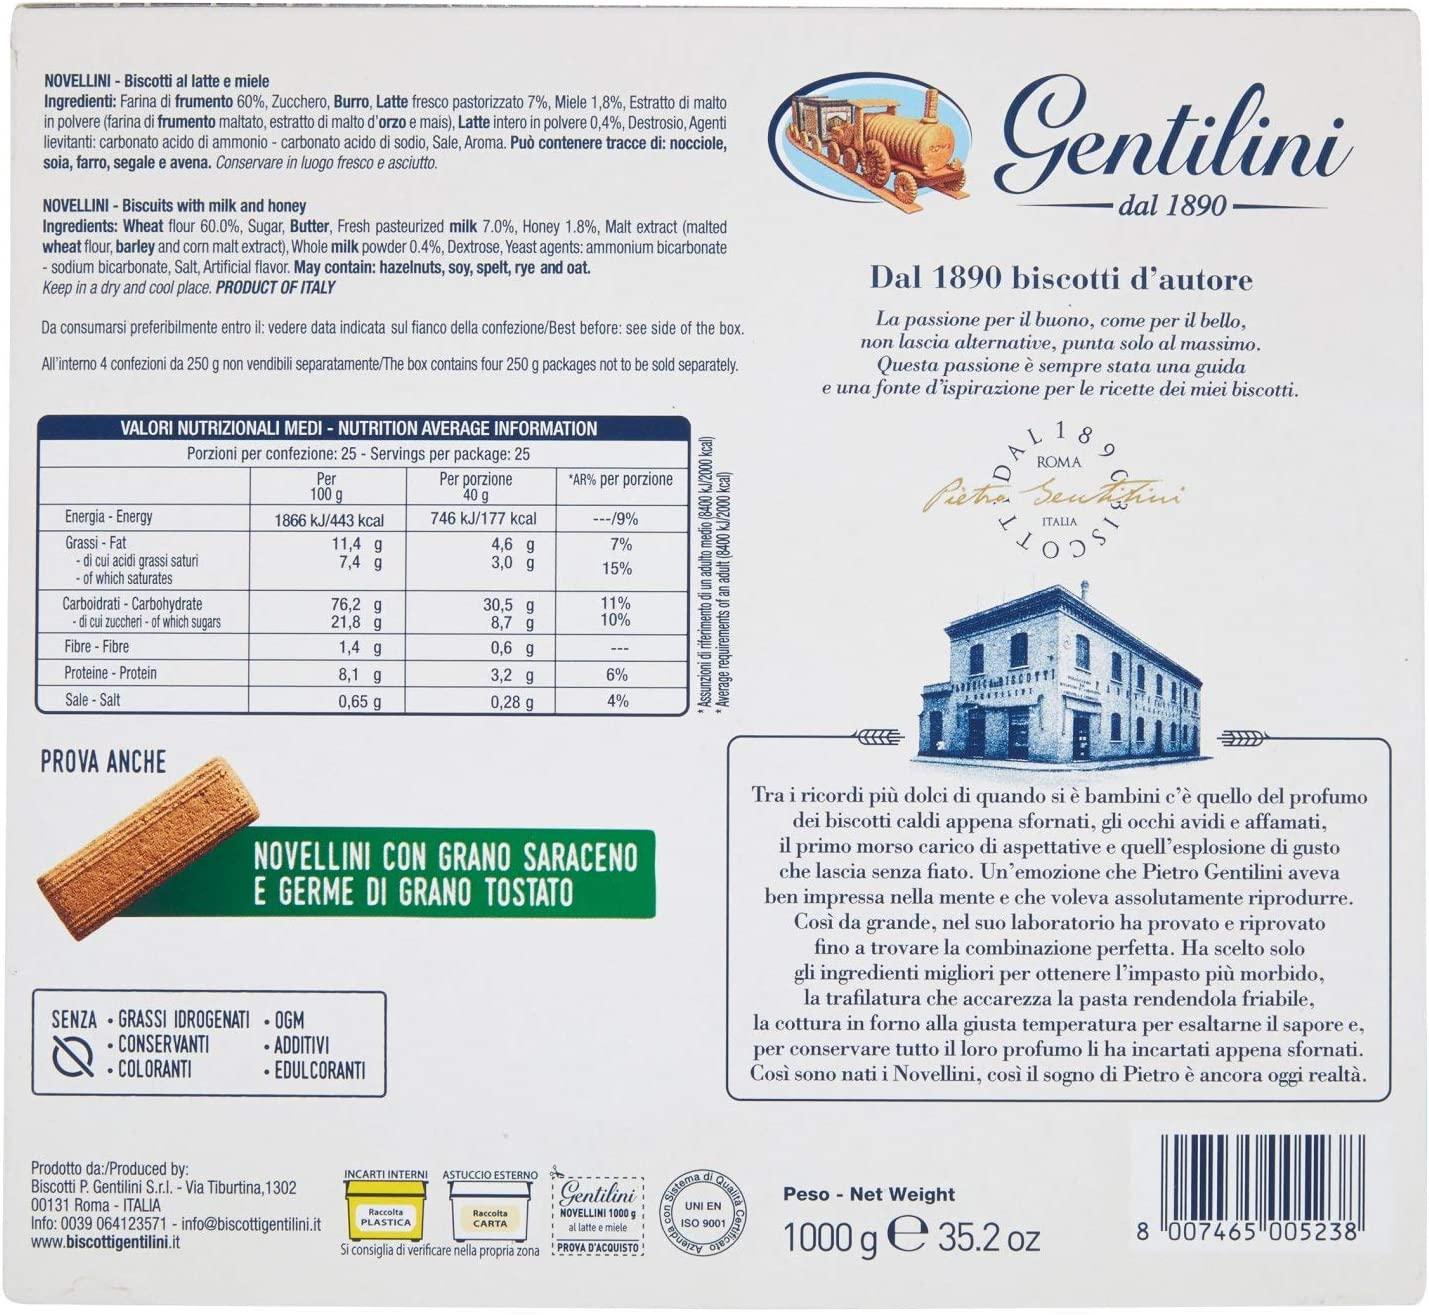 Gentilini Novellini 1000 gr